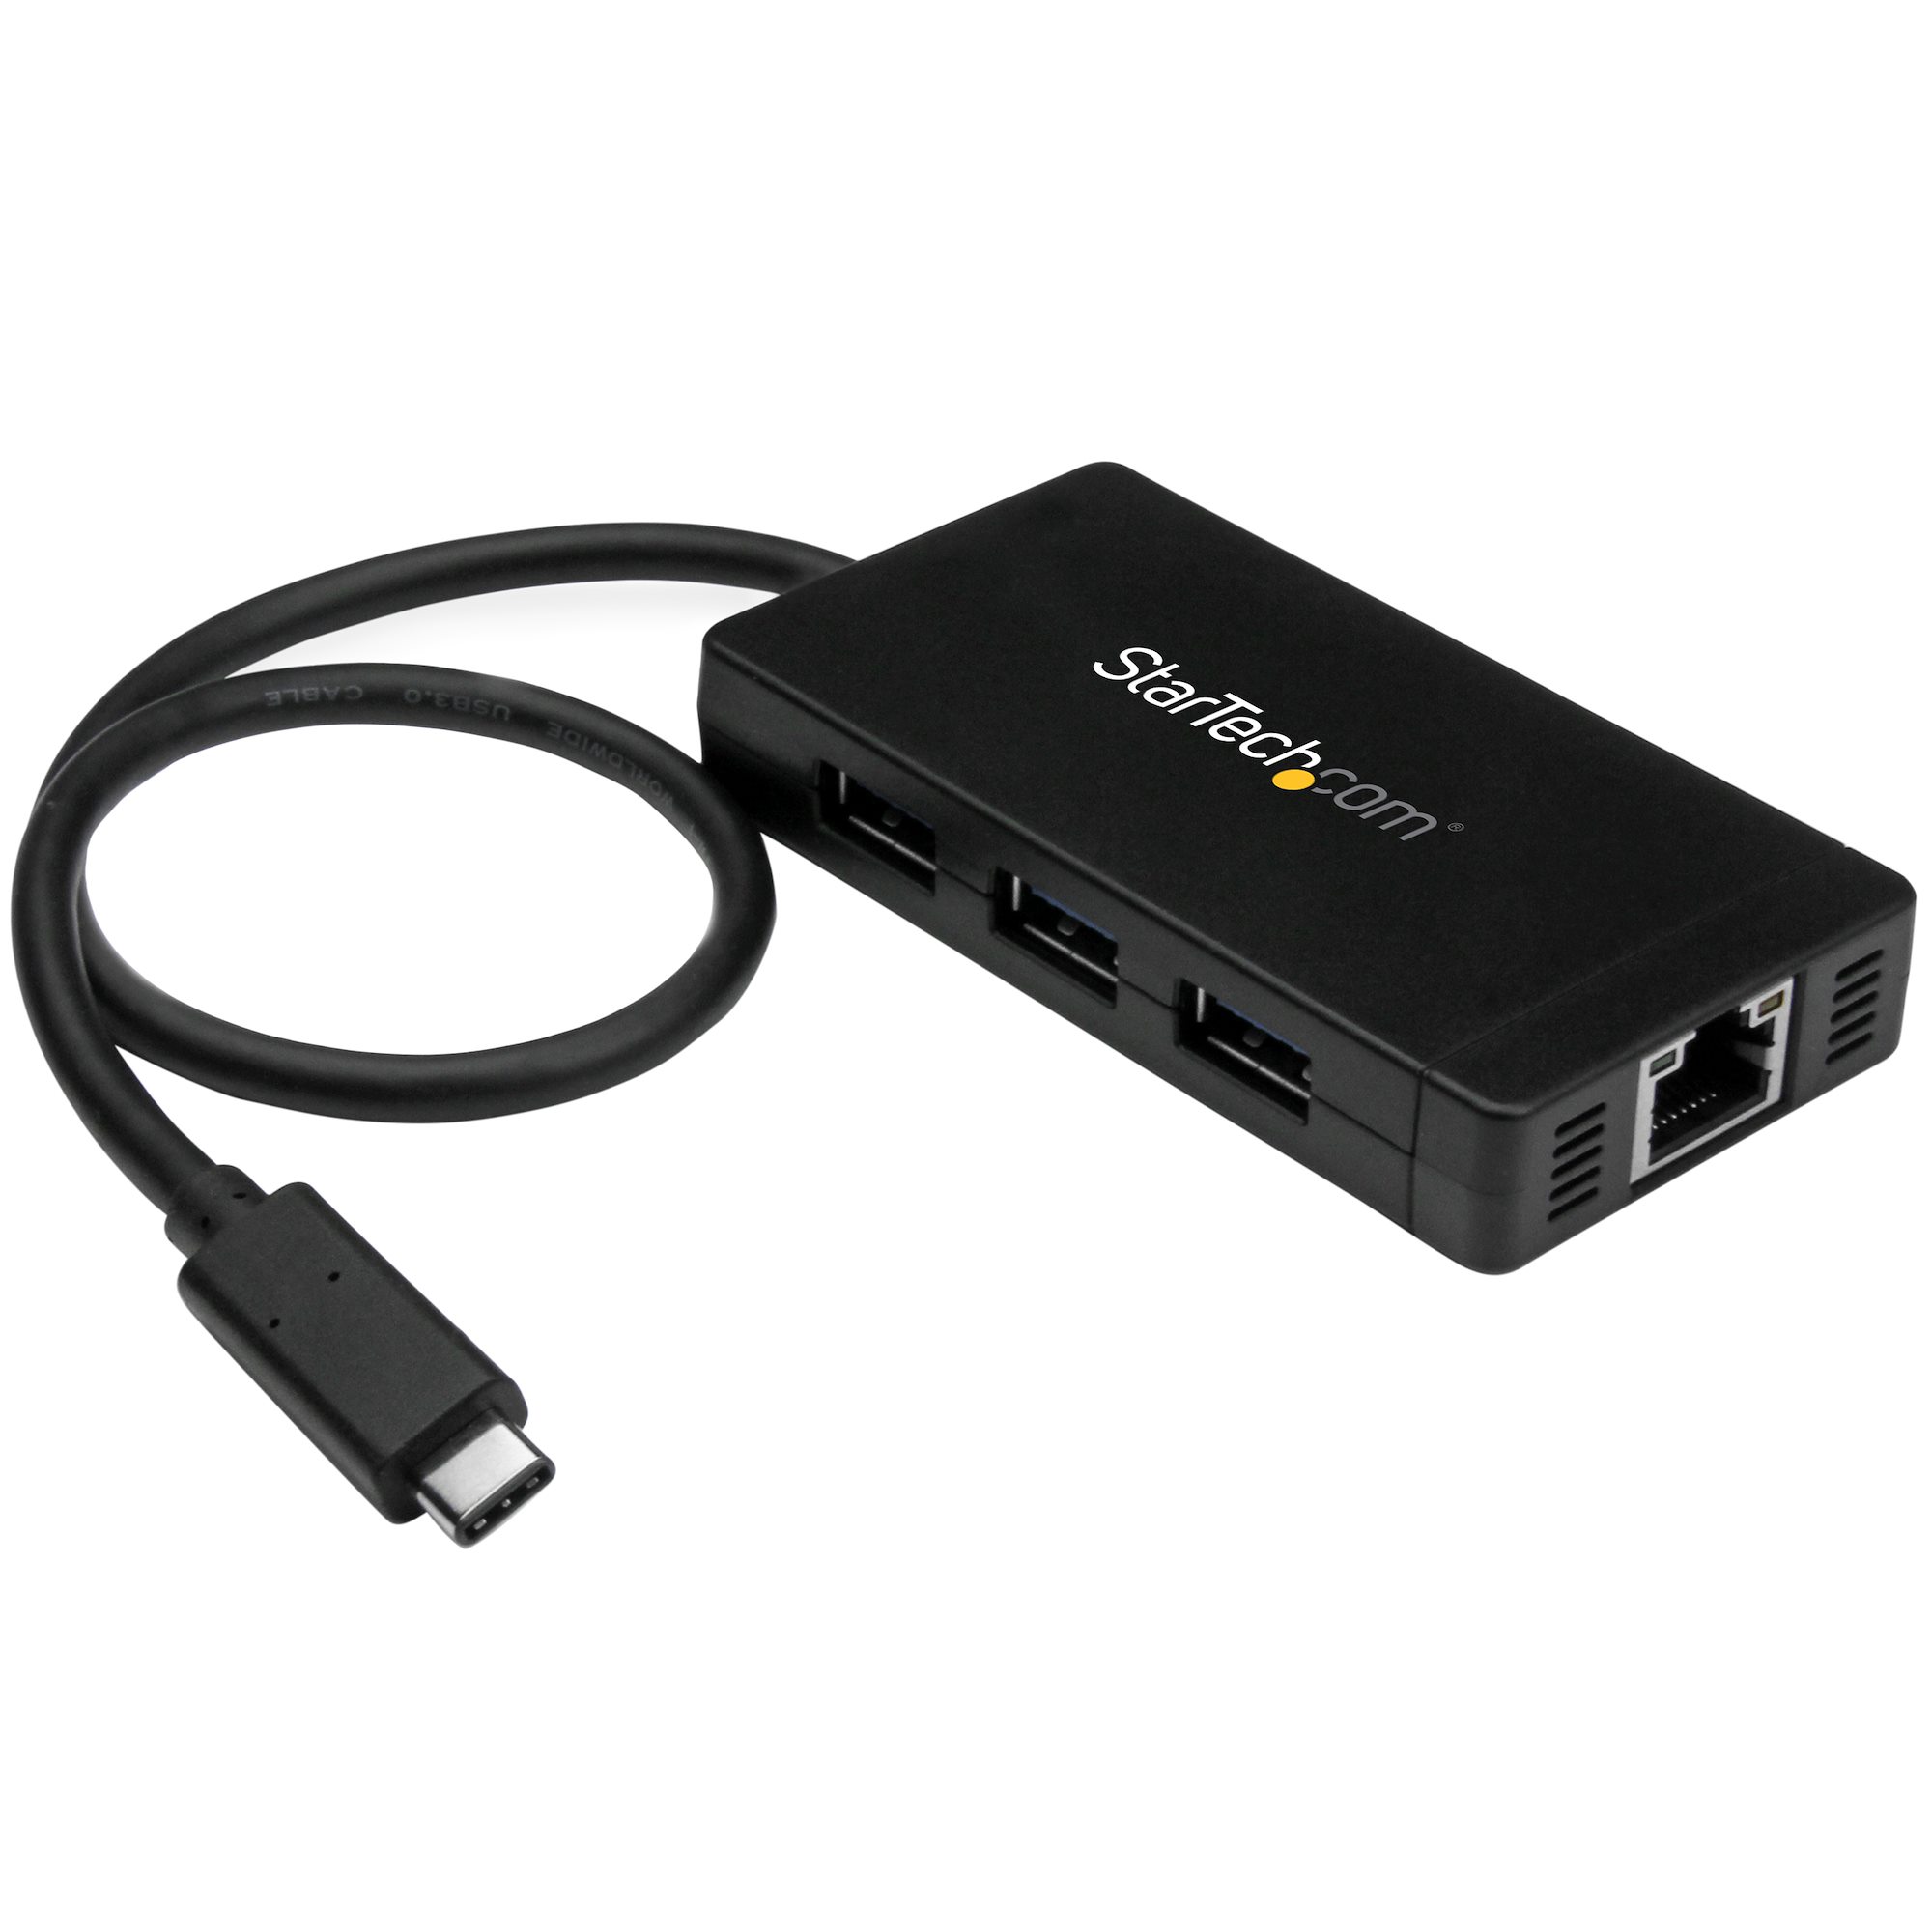 Revisor ikke Sky Hub USB C 3 Port GbE C to A, Power Adapt - USB-C Hubs | StarTech.com